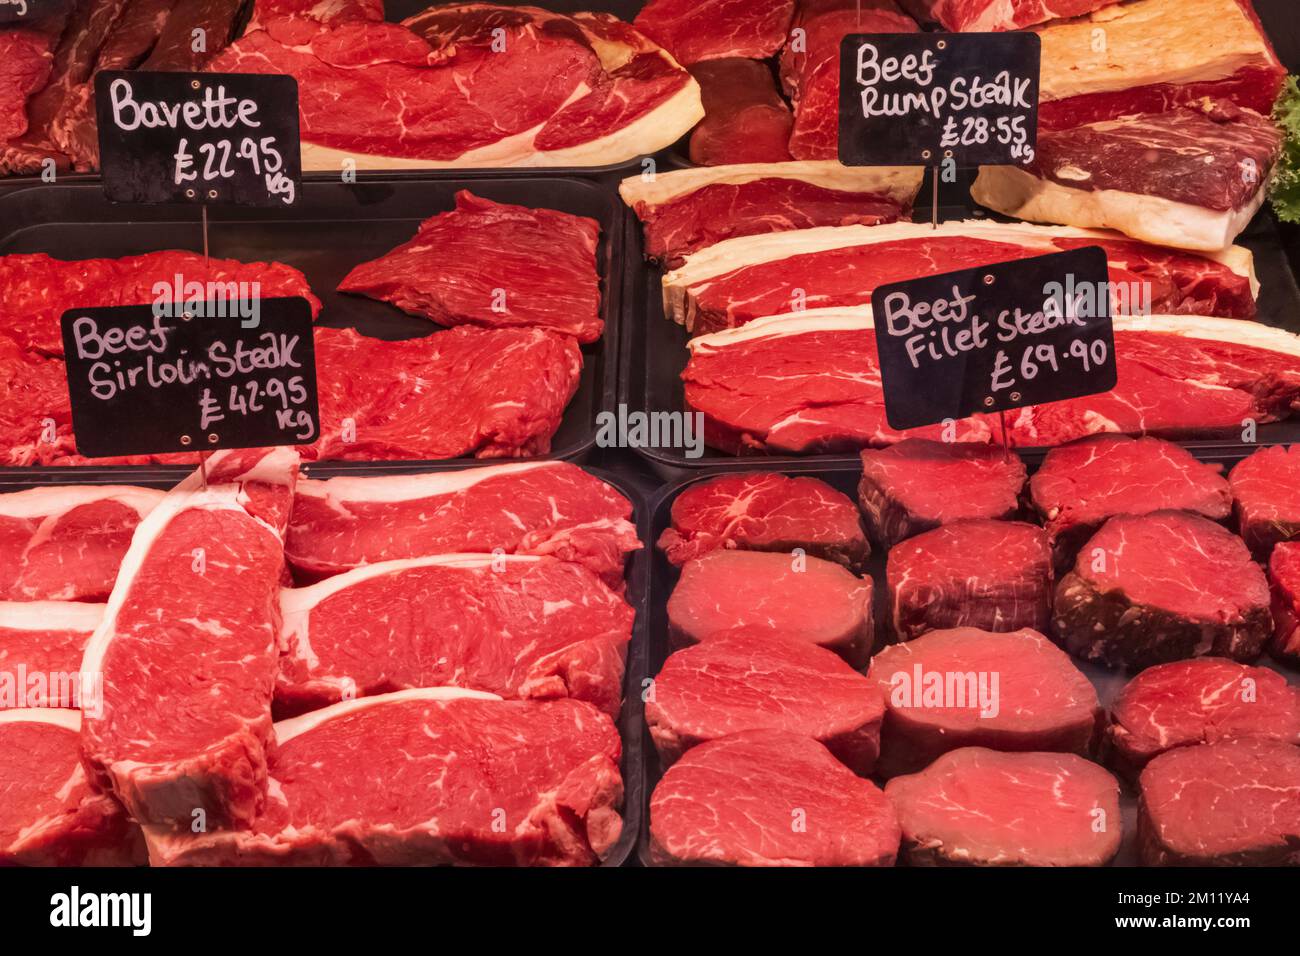 Borough Market, Display of Pork, Southwark, London, England Stock Photo